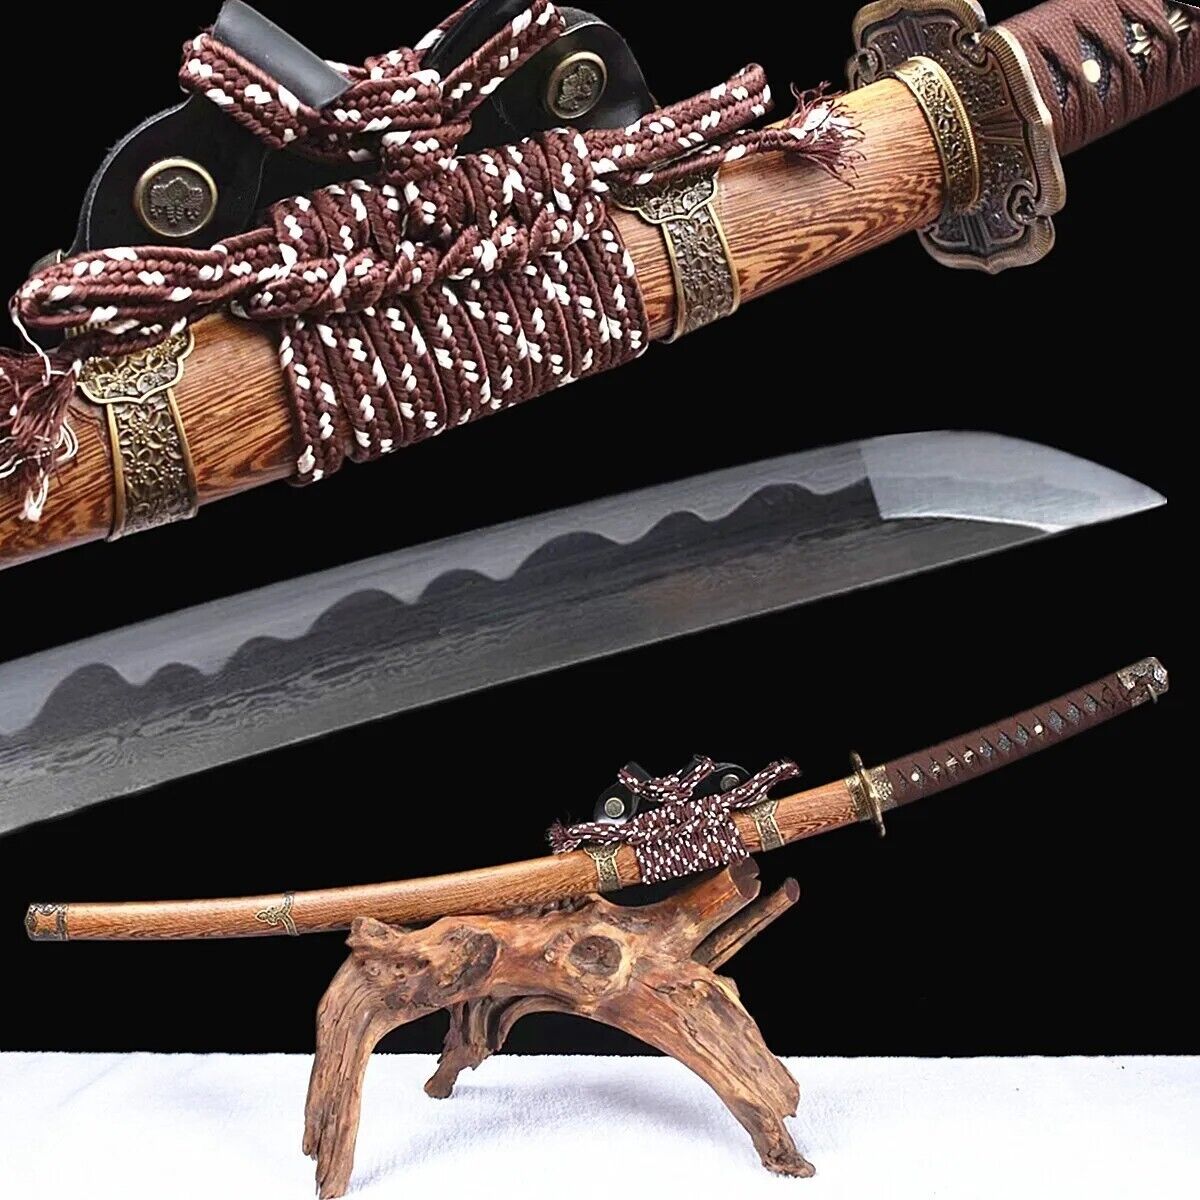 Real Tachi Katana Battle Ready Sharp Folded Carbon Steel Japanese Samurai Sword